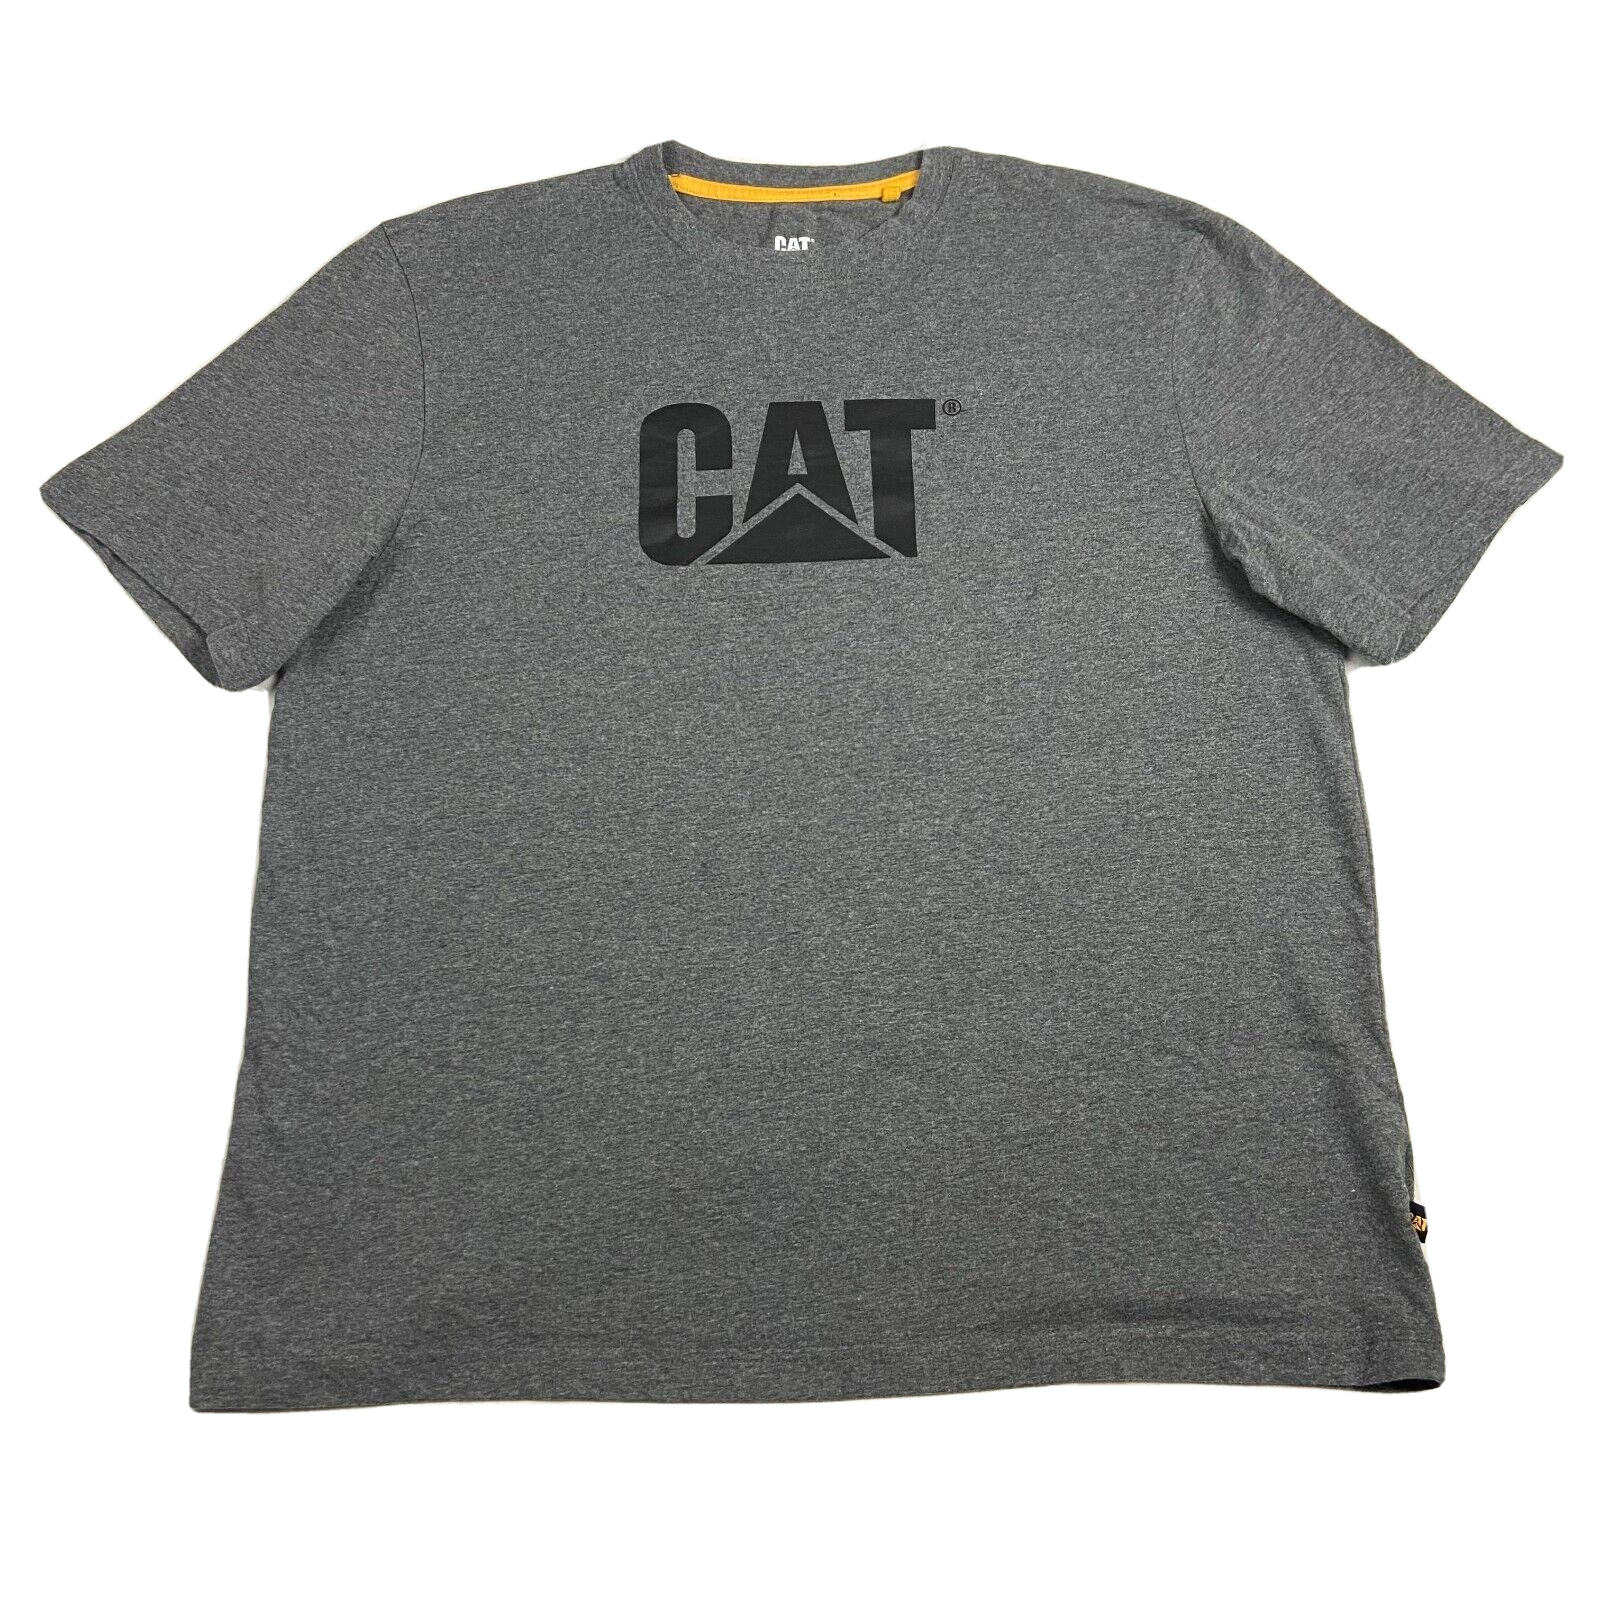 Caterpillar CAT Men's Logo Workwear Relaxed Fit Tee (Gray, Large)